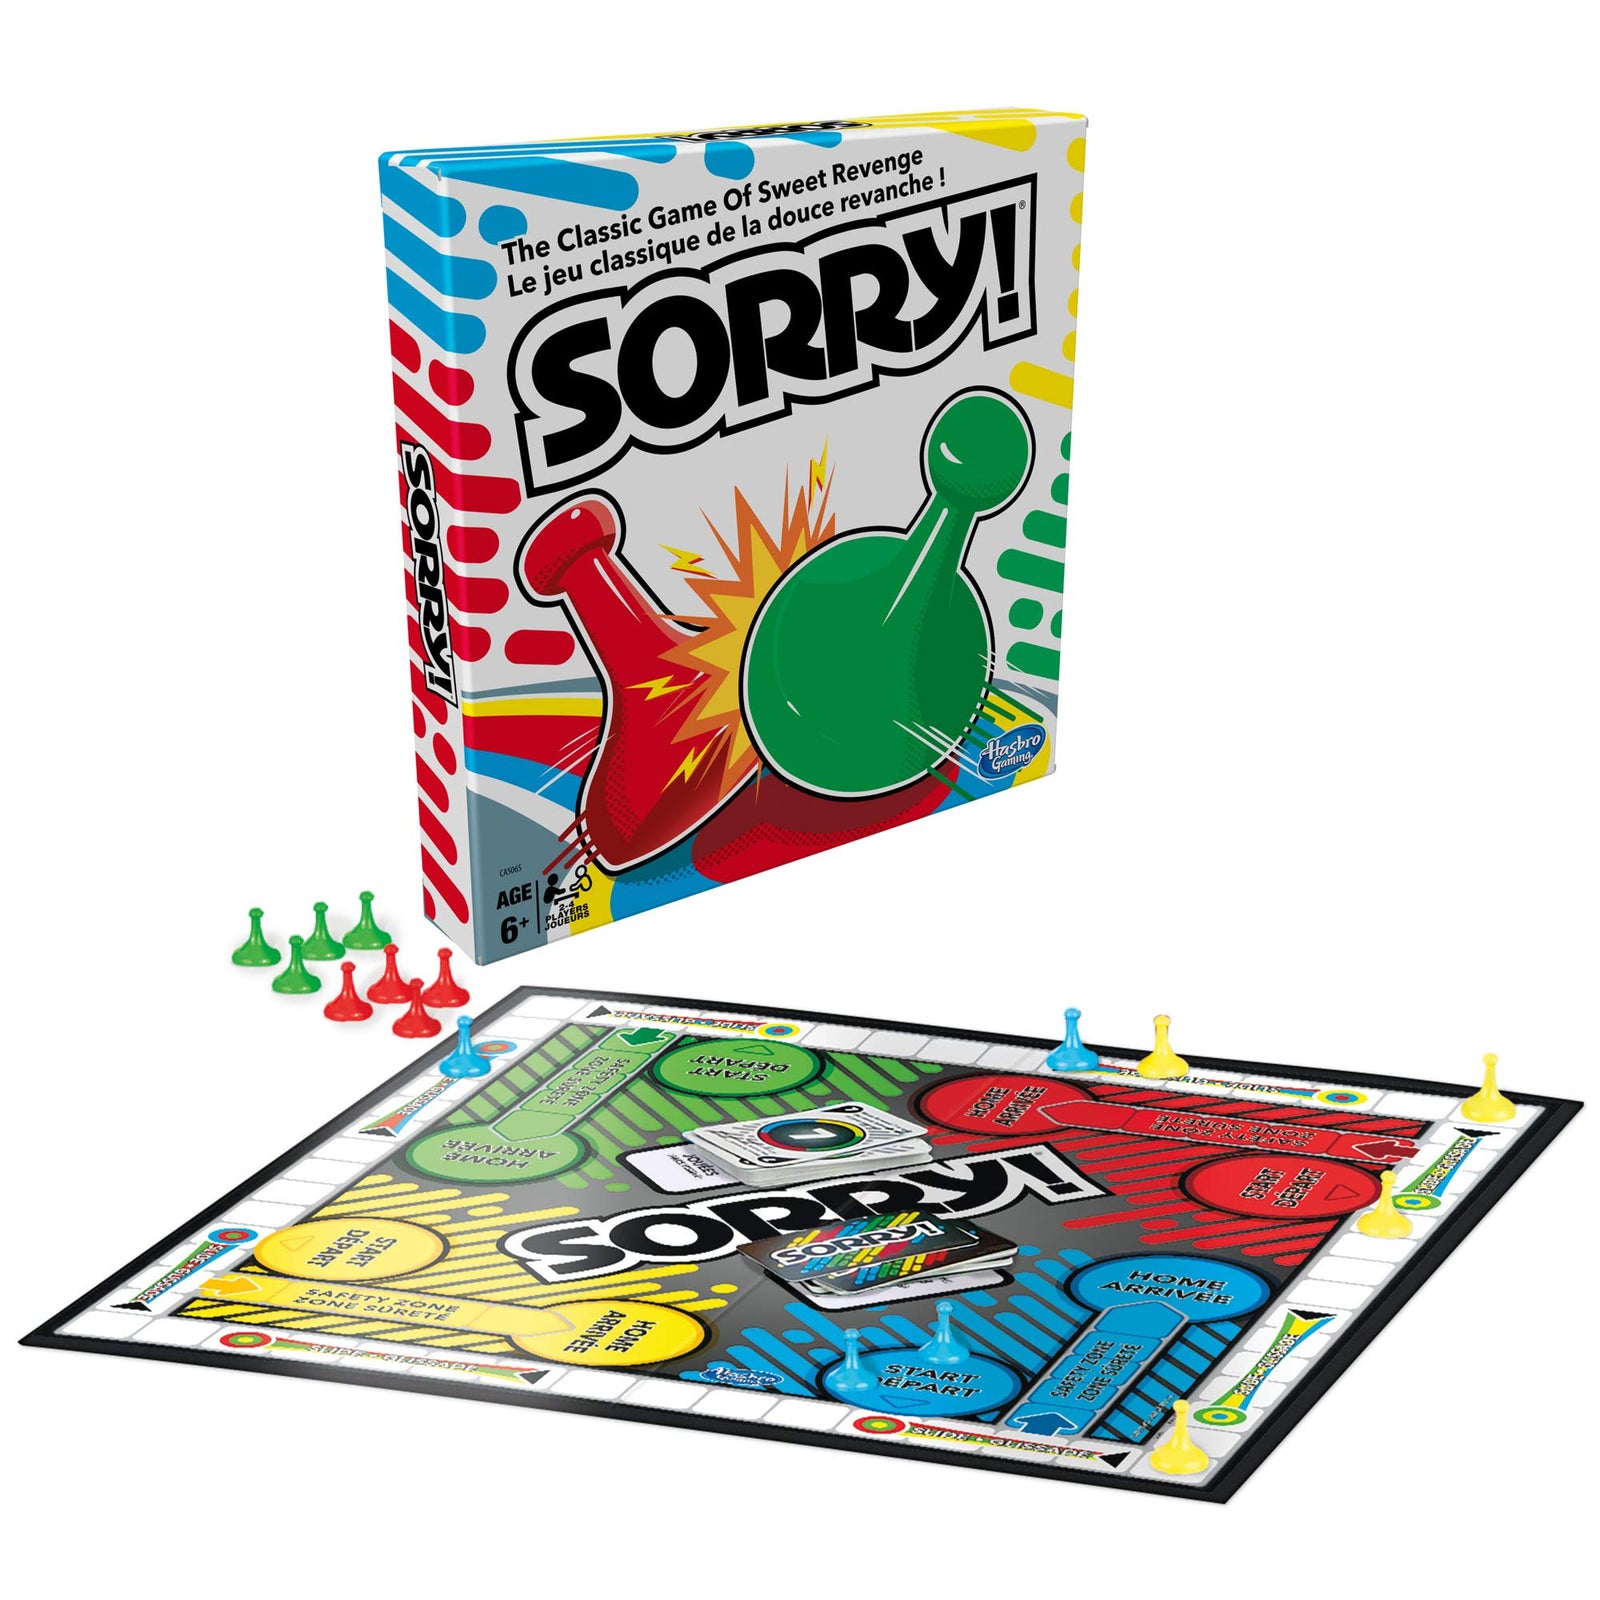 Hasbro Gaming Sorry! Family Board Game